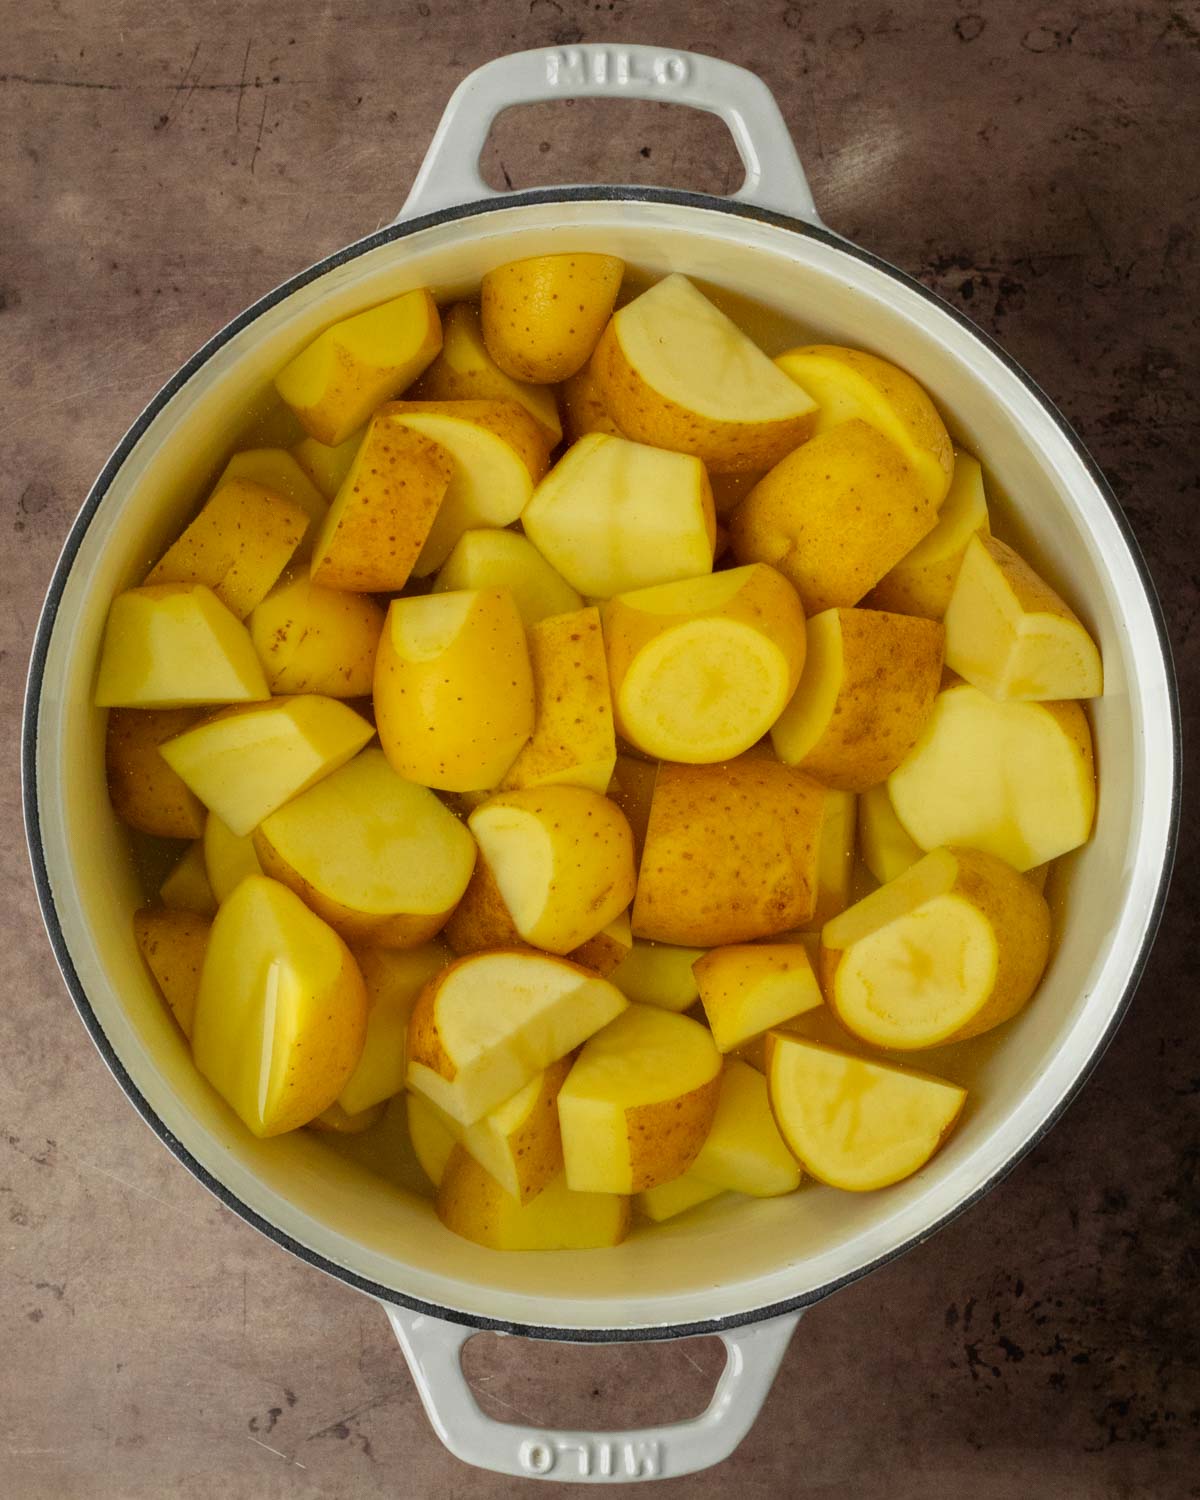 Step 1. Boil the potatoes